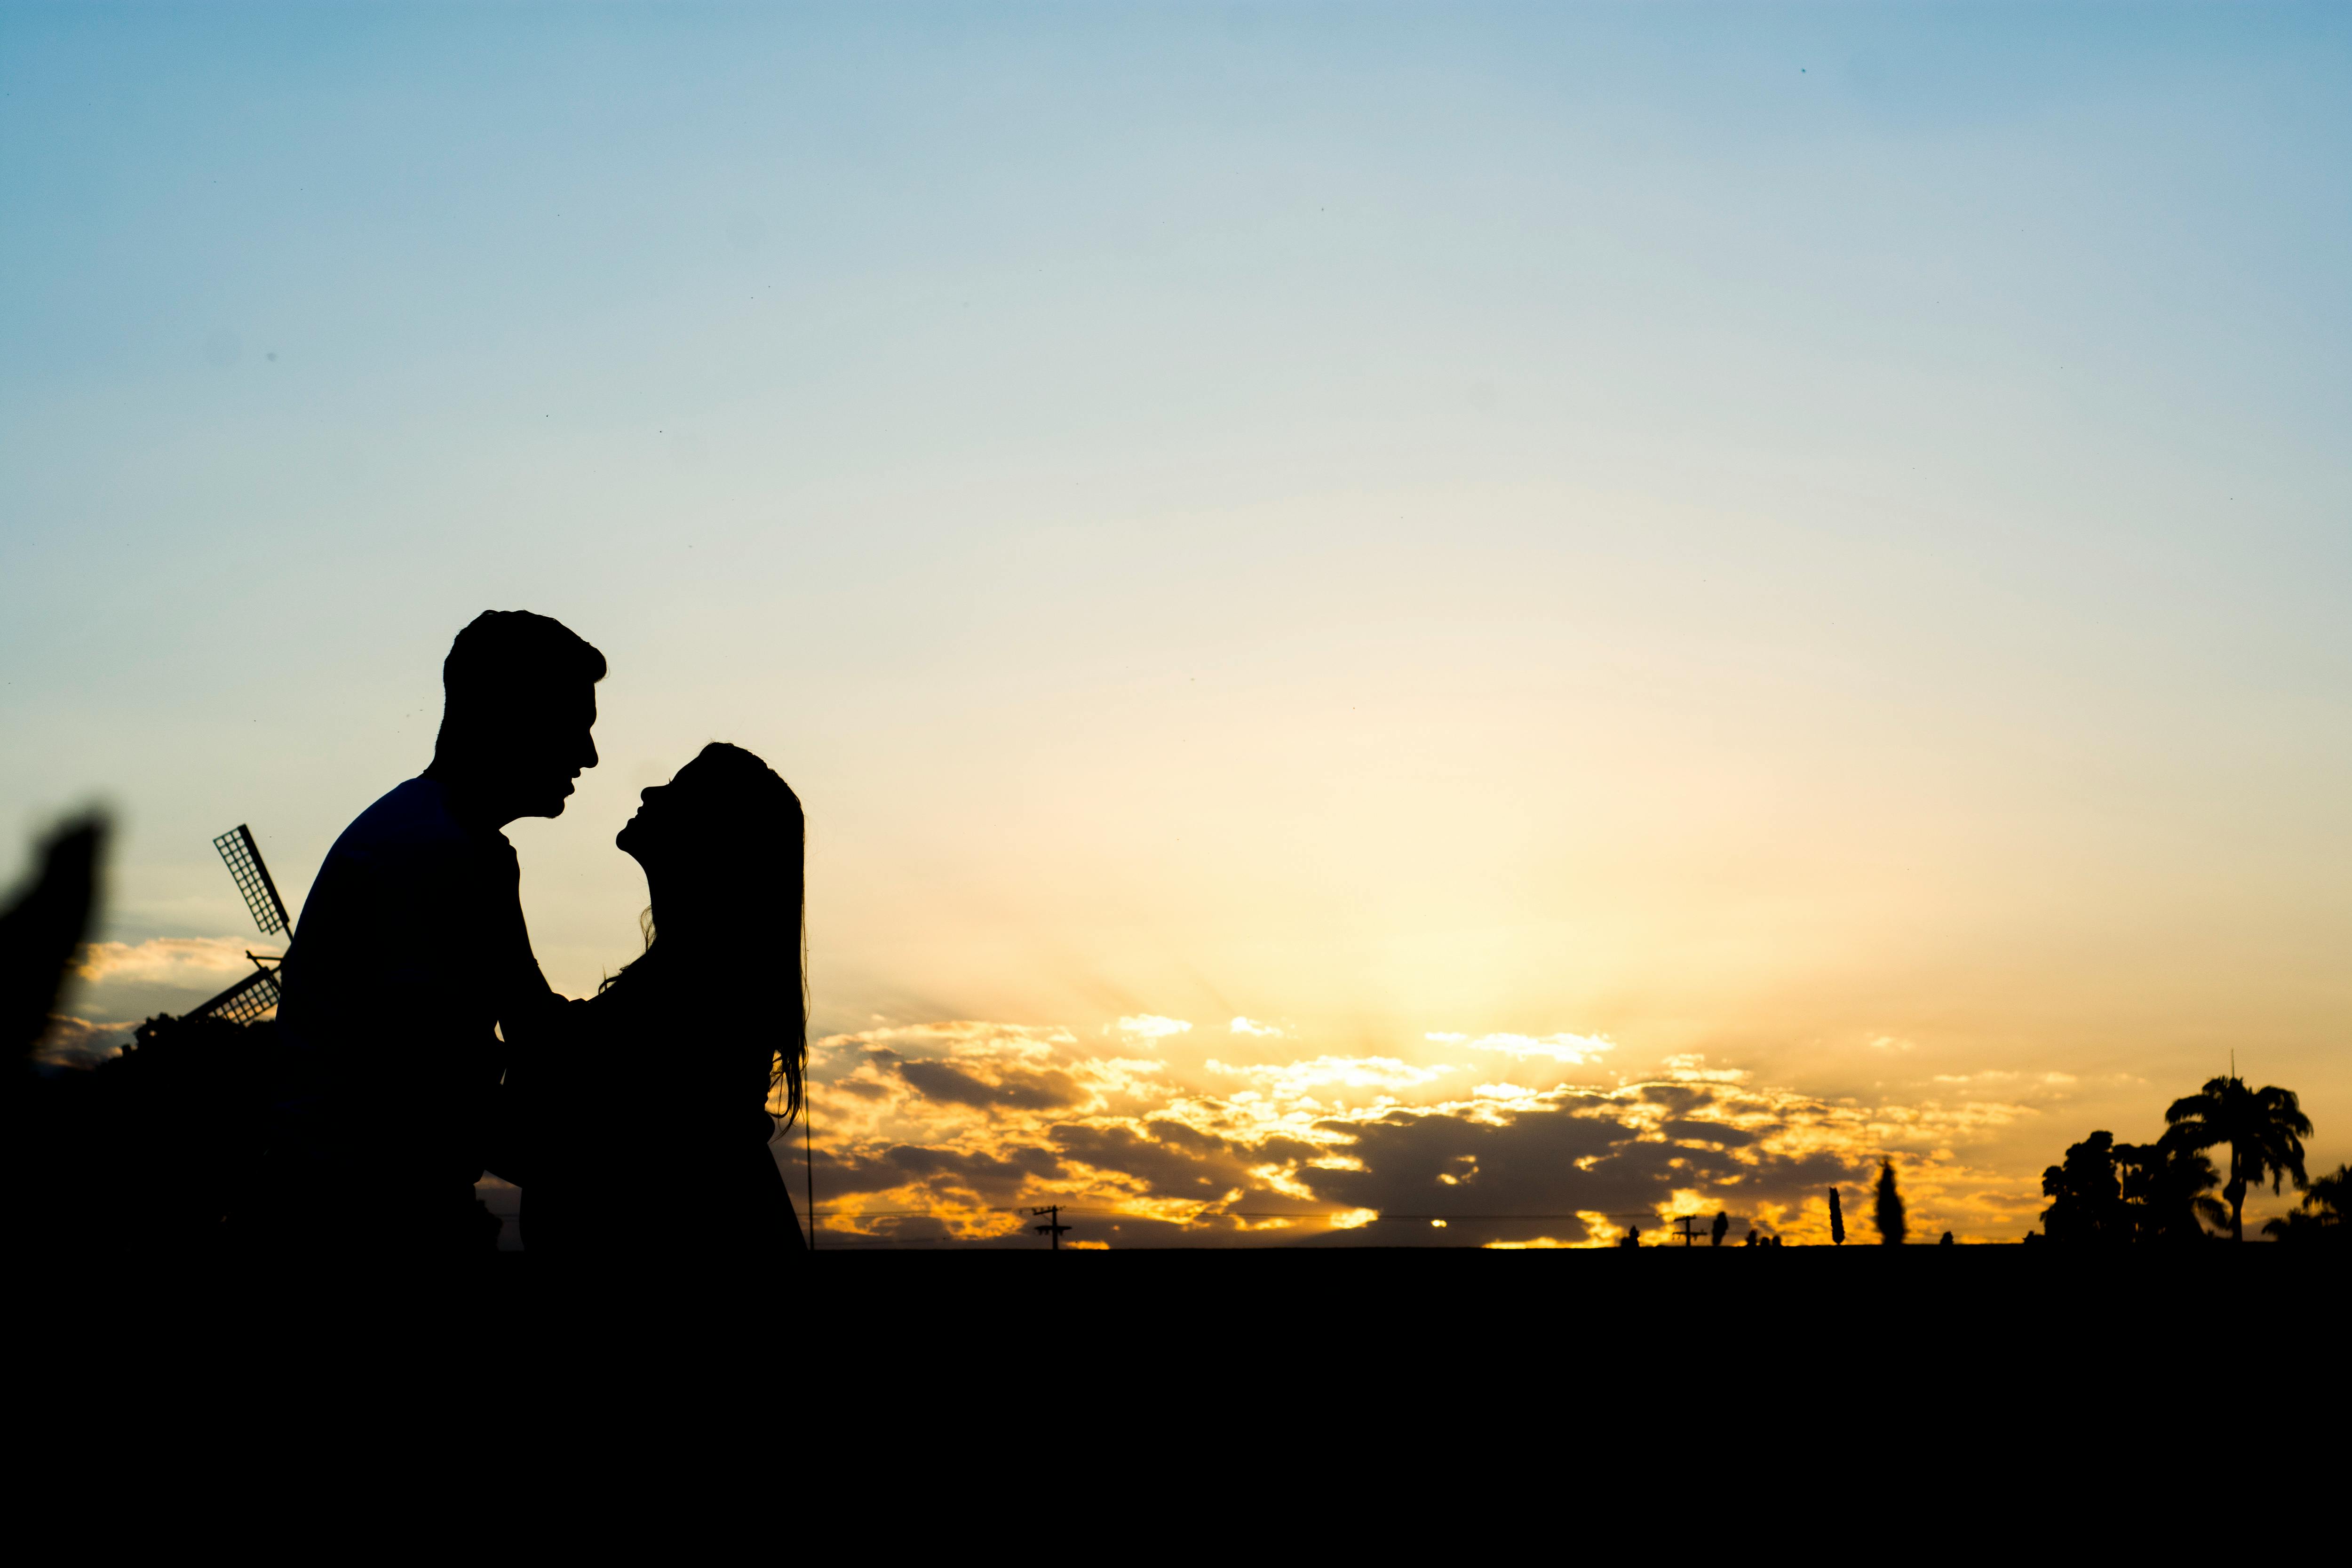 romantic couple silhouette